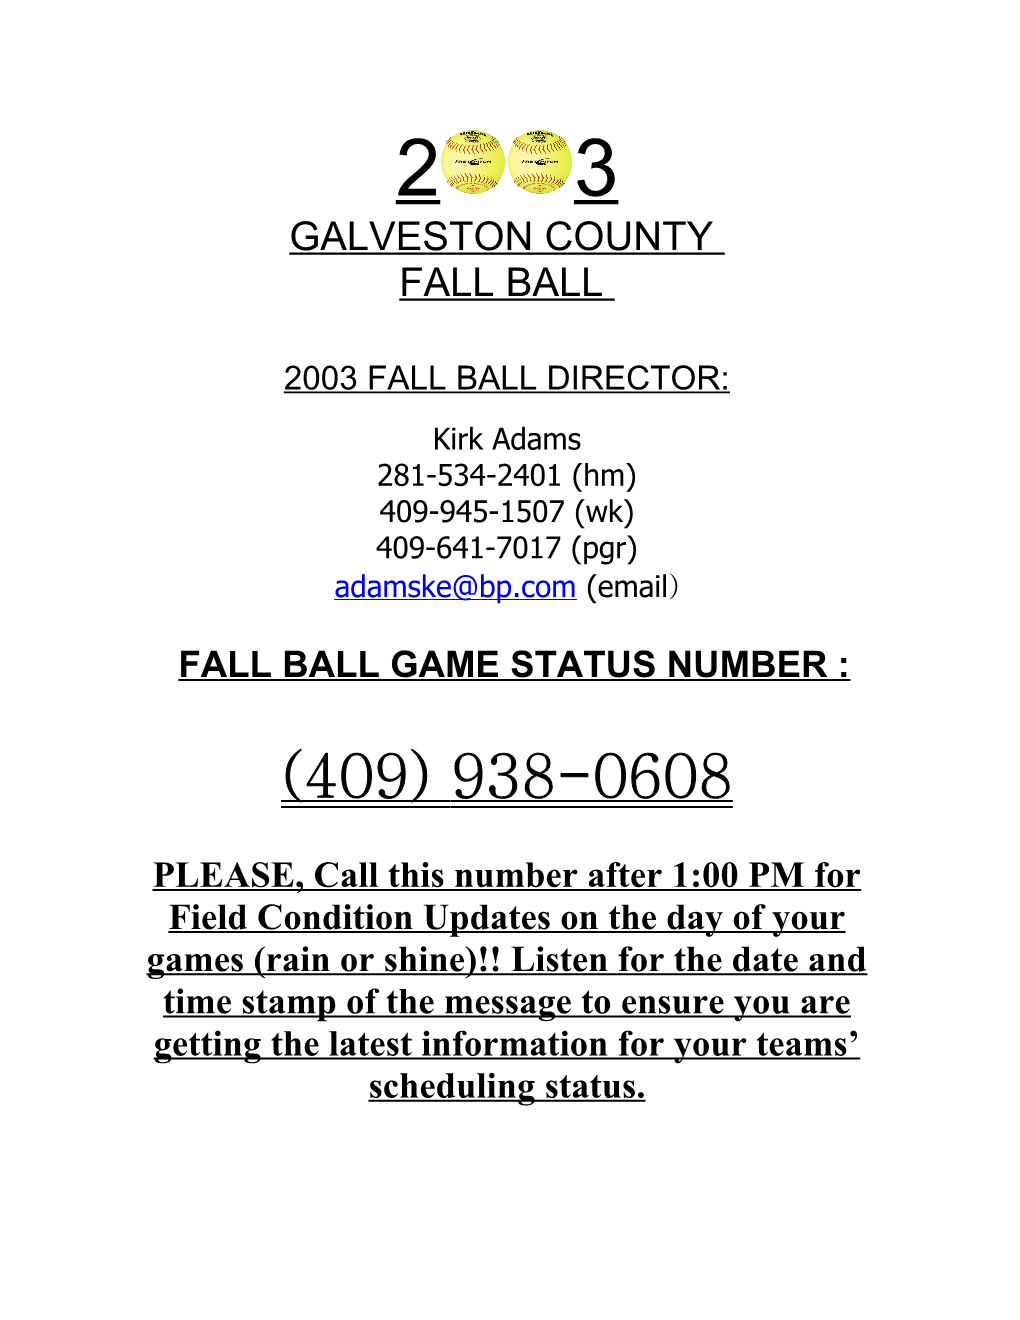 Fall Ball Game Status Number